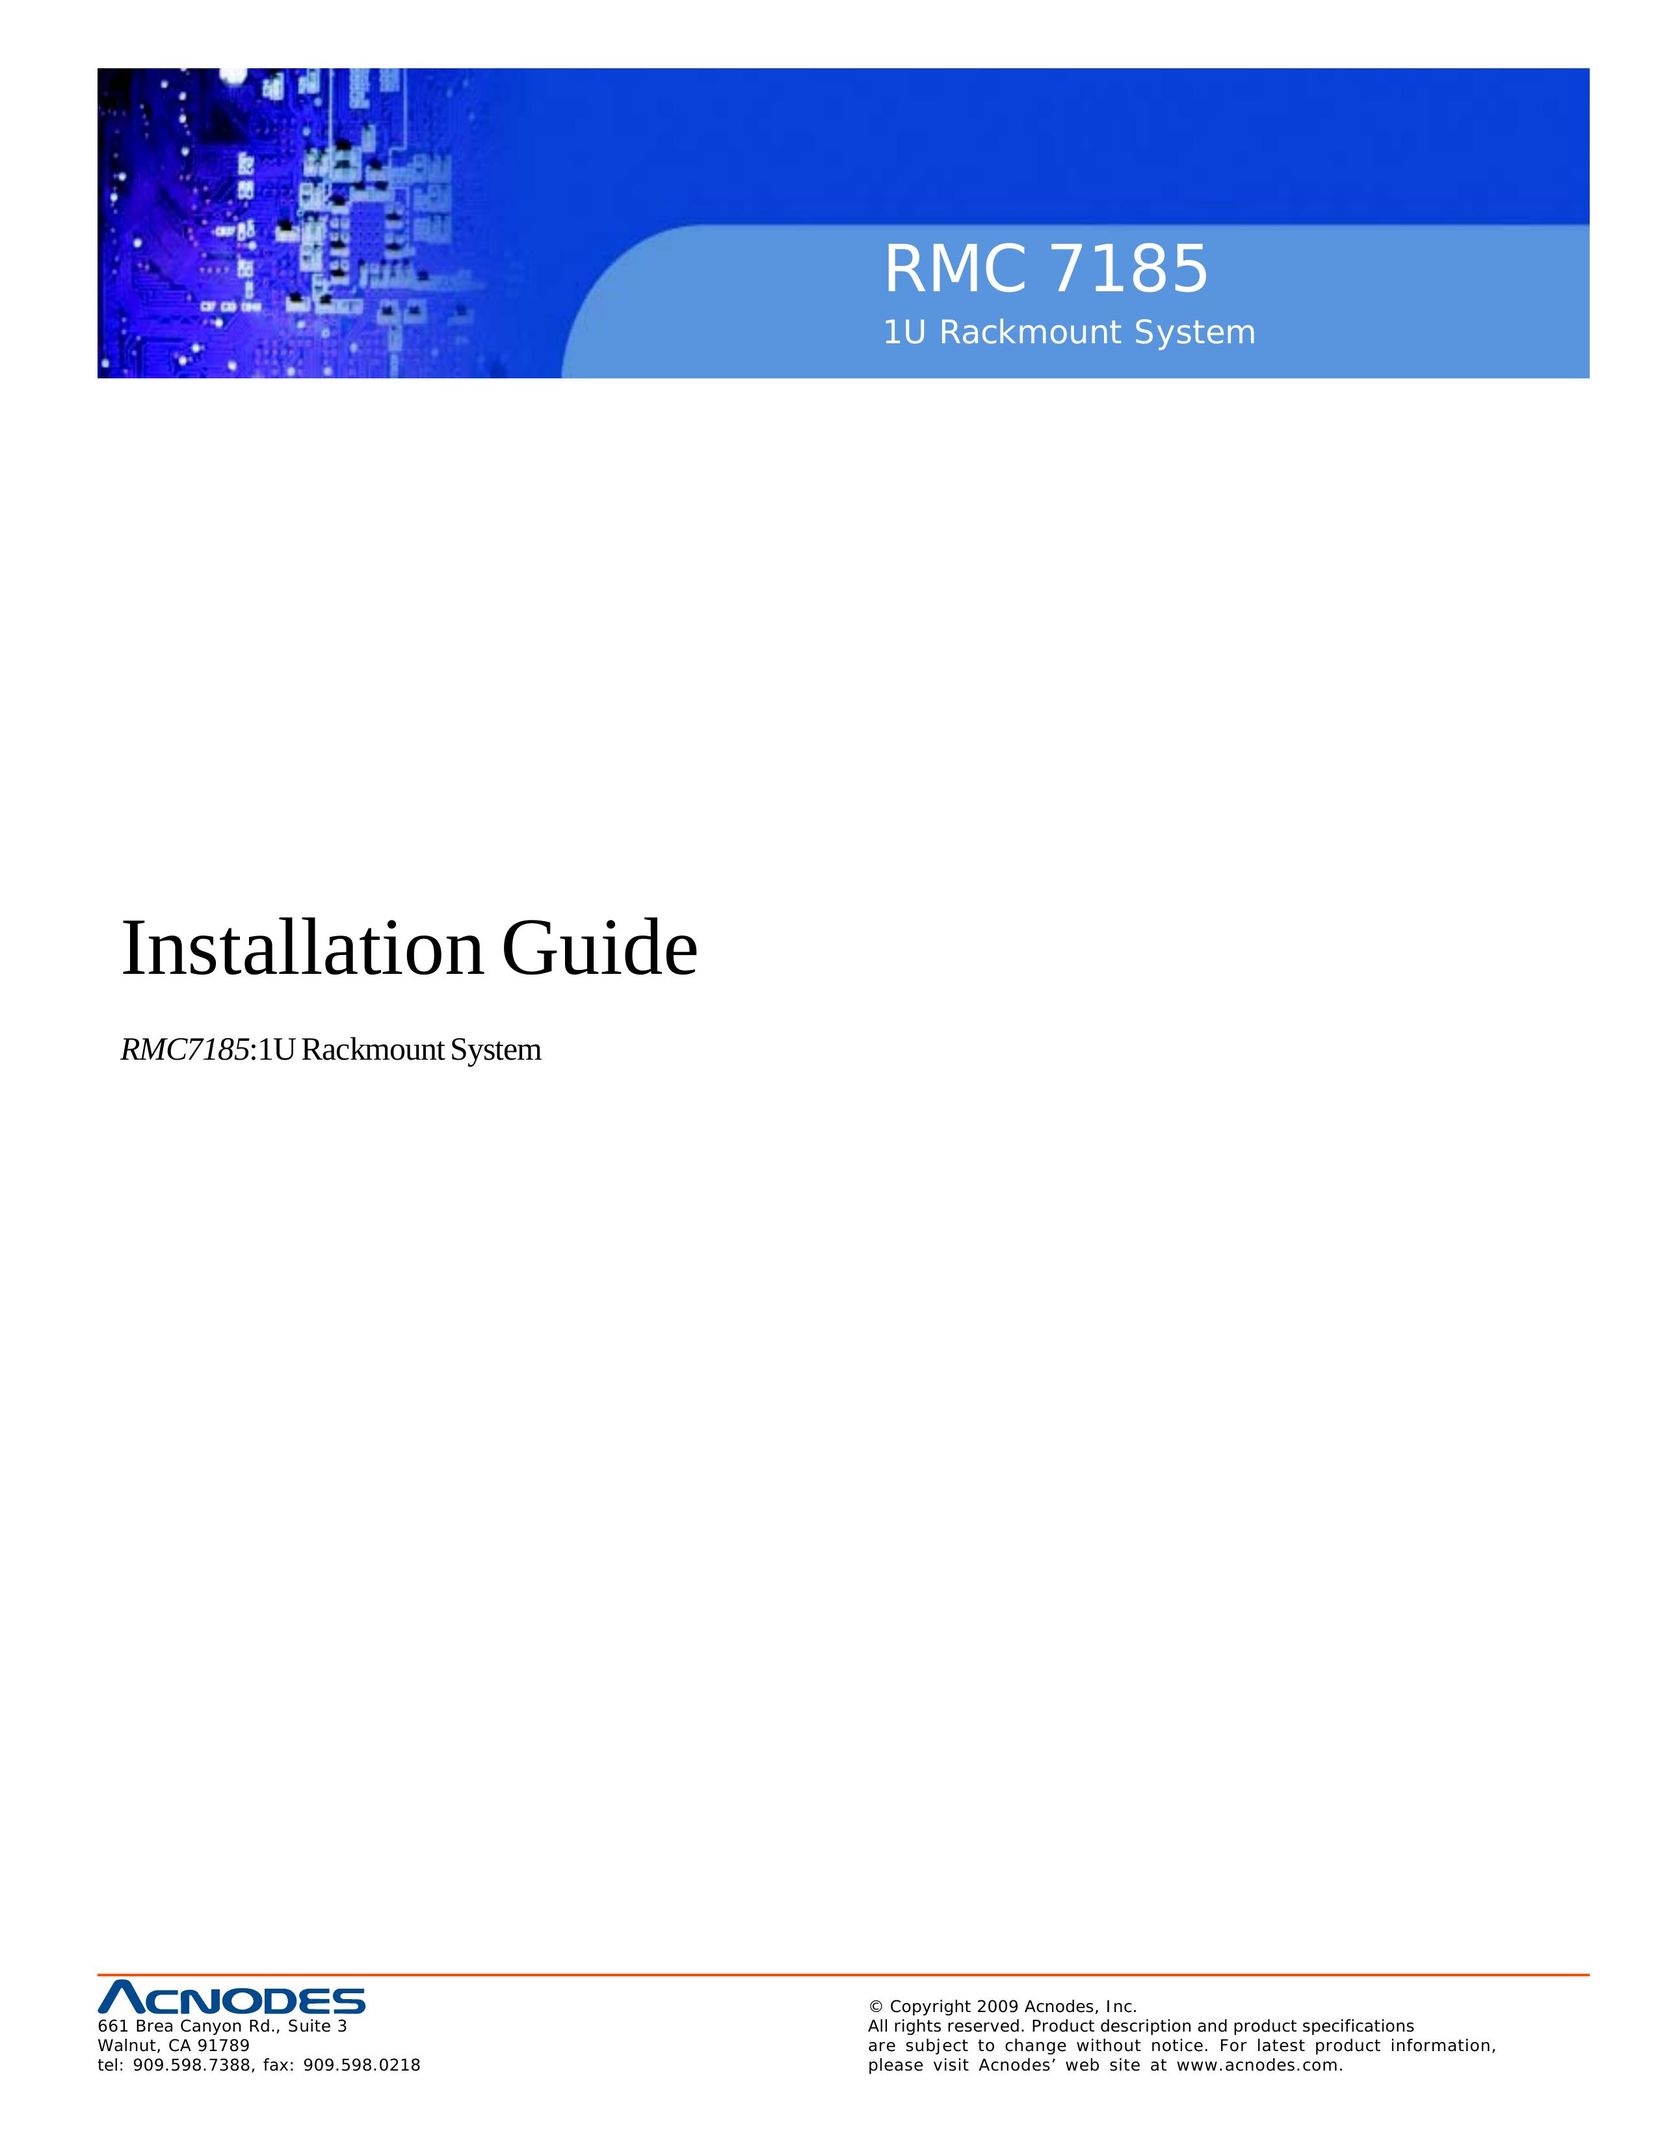 Acnodes RMC 7185 Computer Hardware User Manual